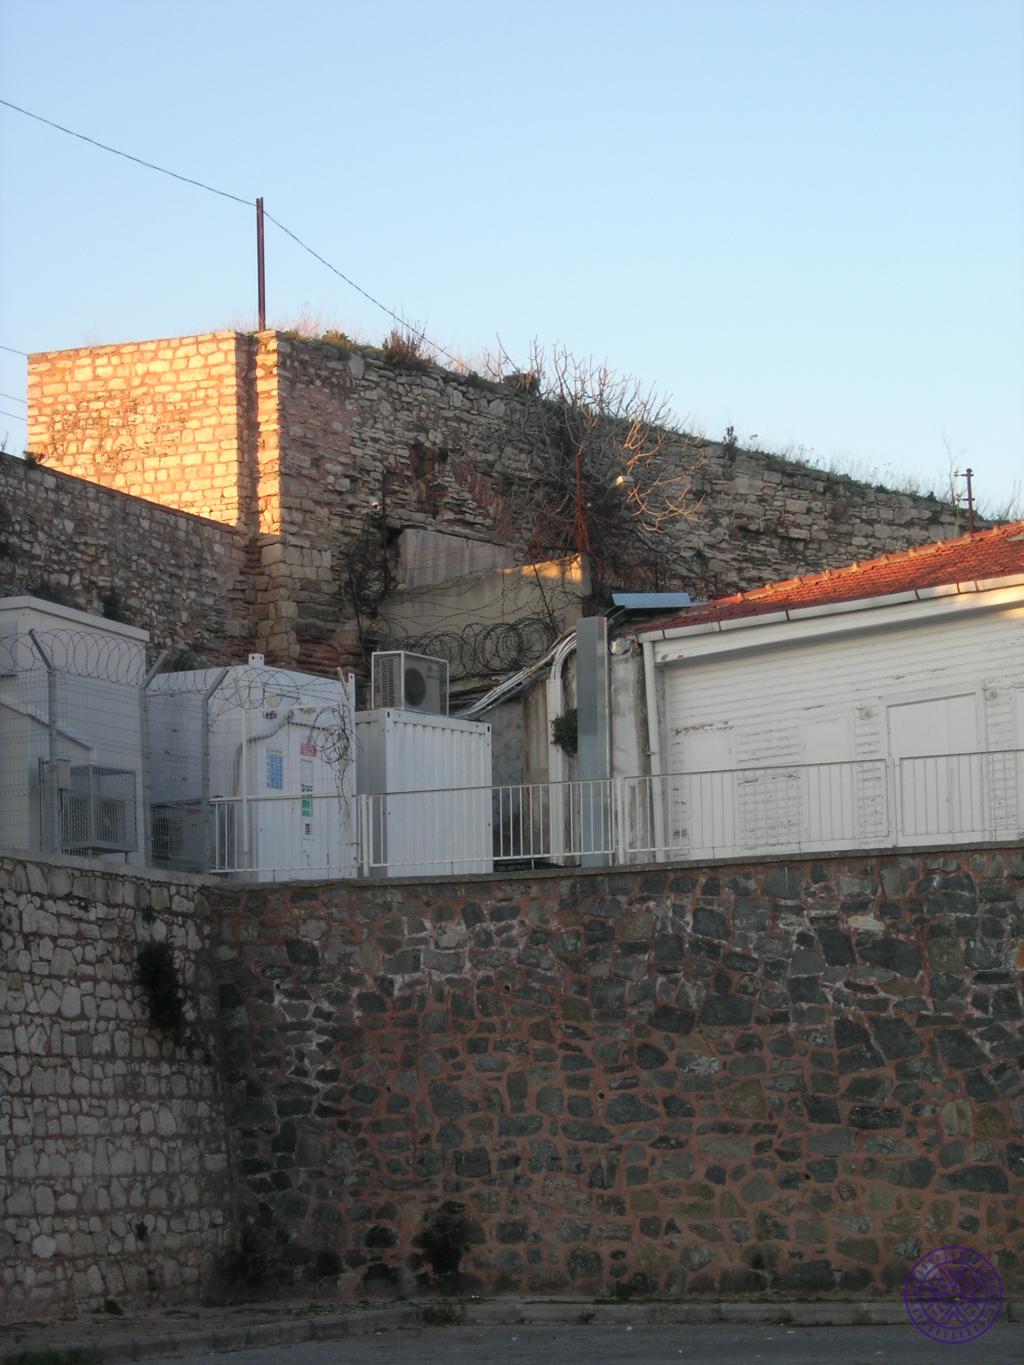 Narlı Kapı (gate) - Istanbul City Walls